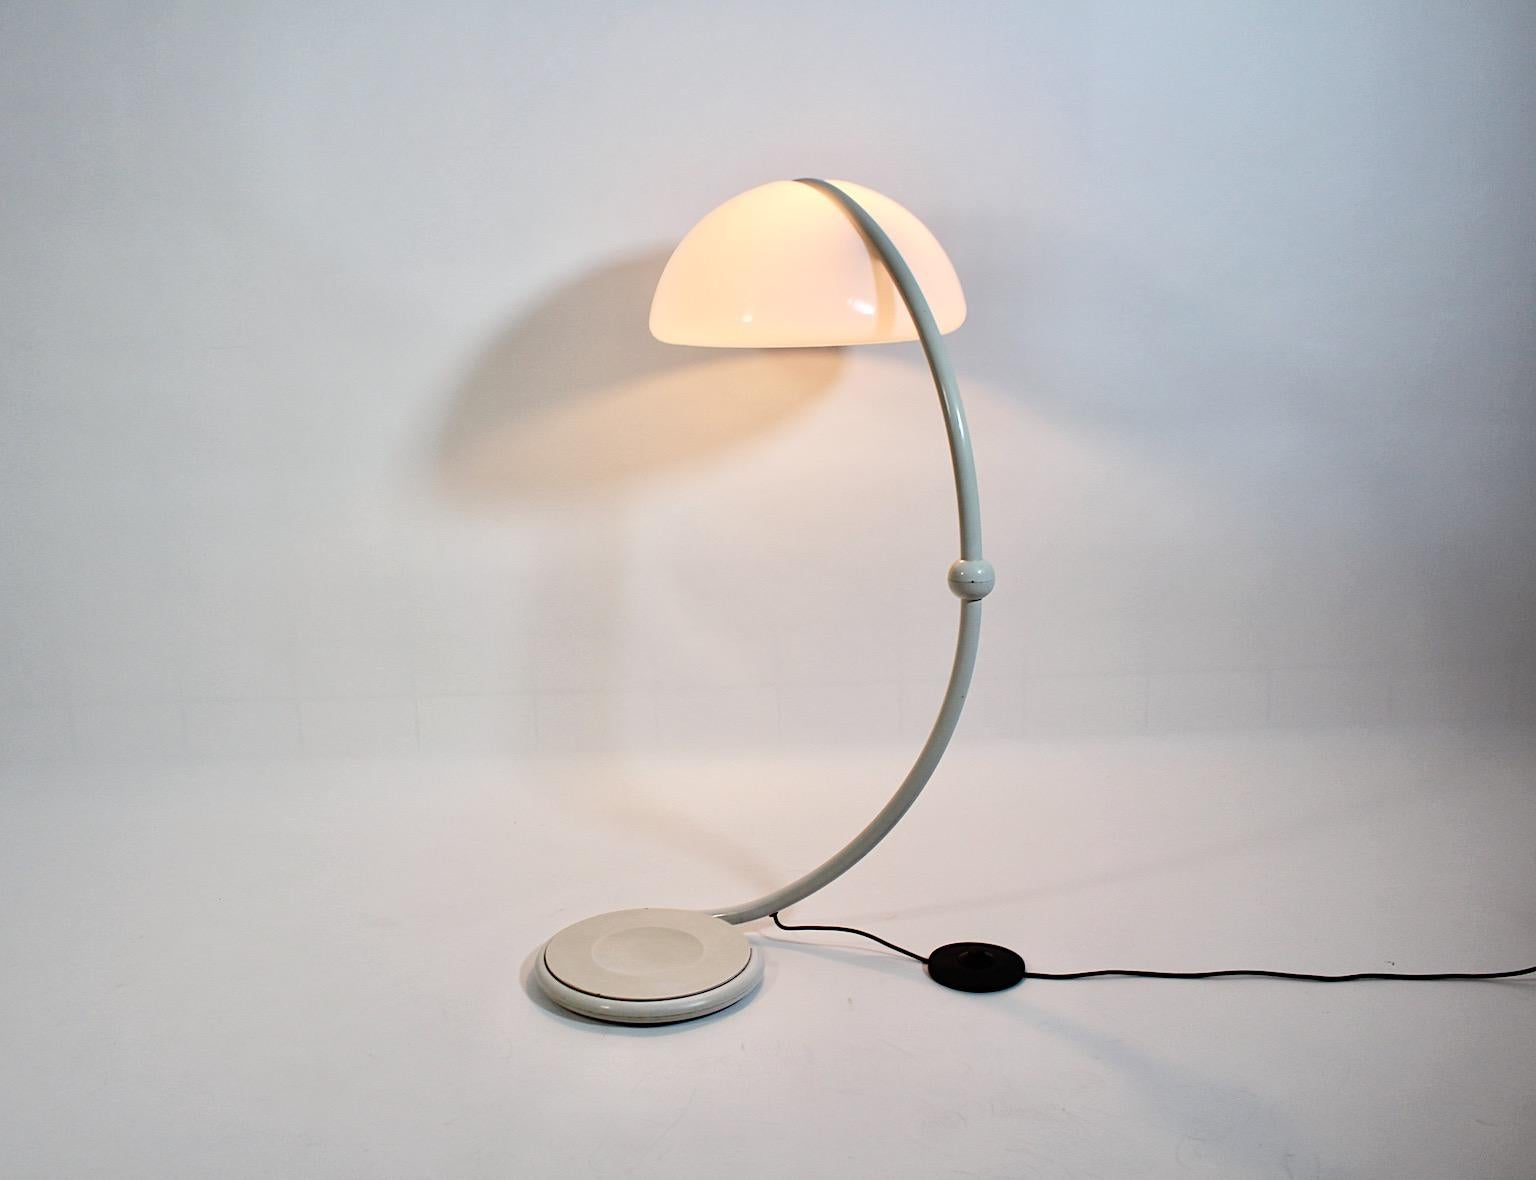 20th Century Space Age Vintage Floor Lamp White Plastic Metal Elio Martinelli 1970s Italy For Sale